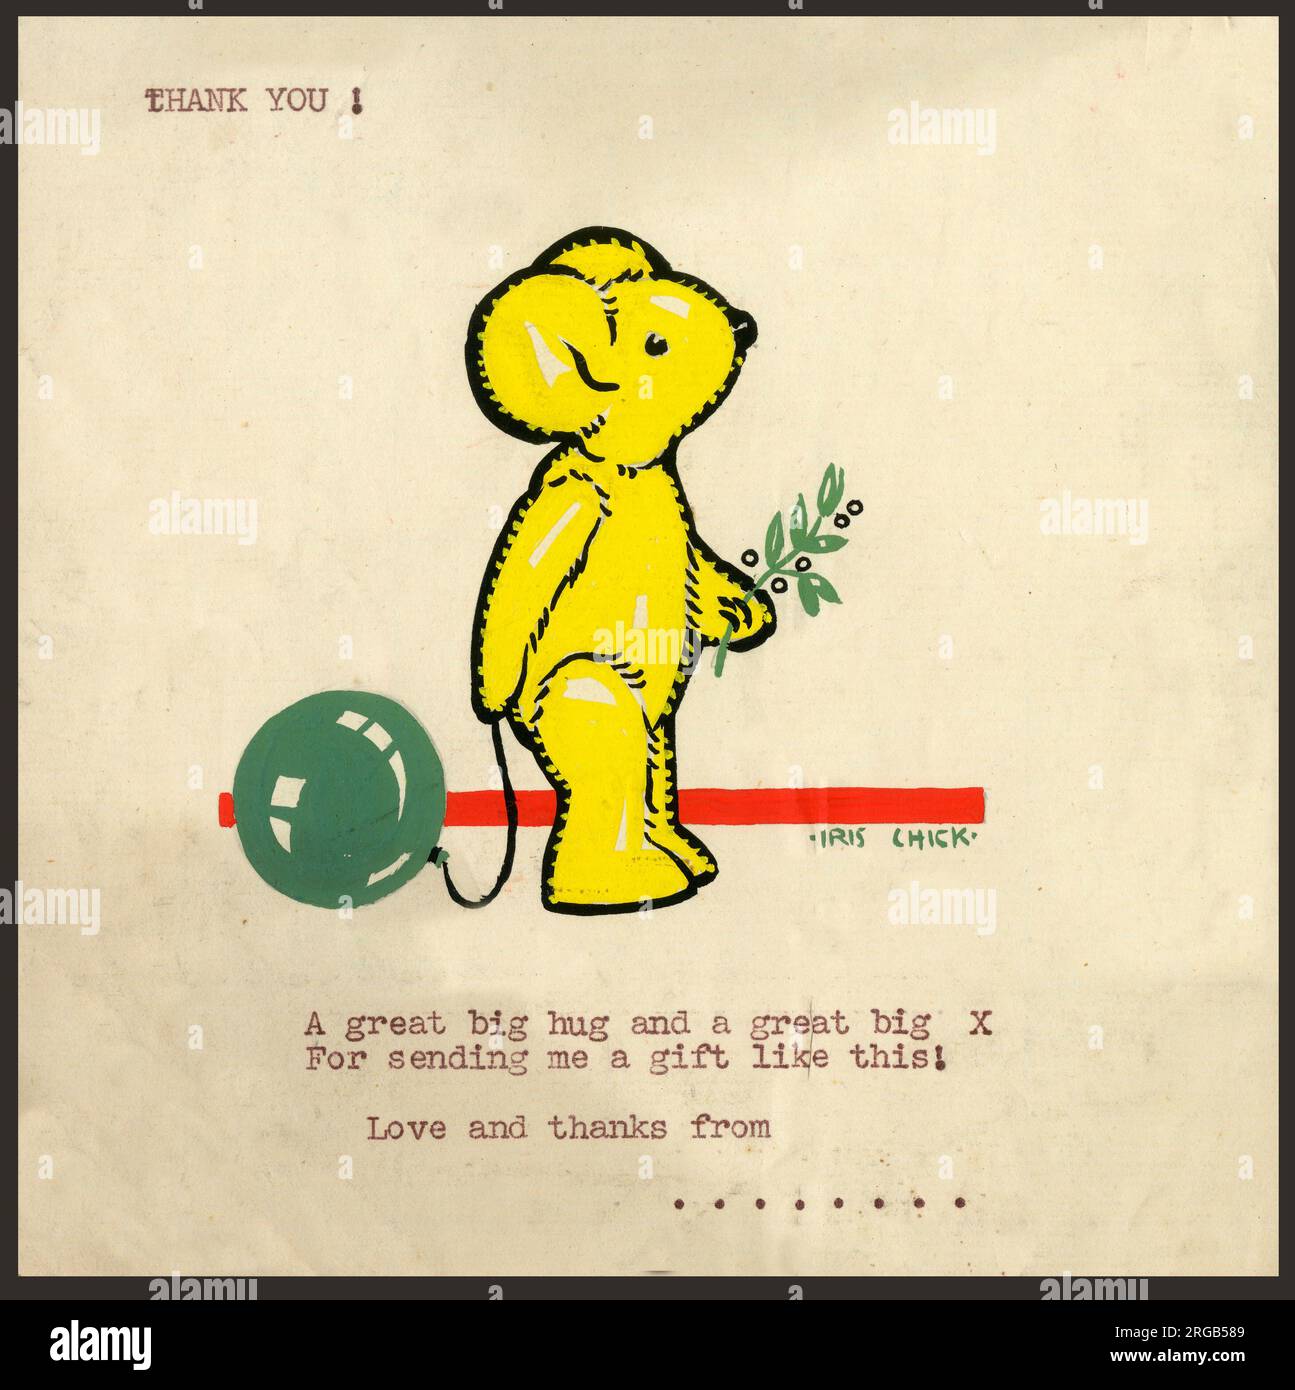 Original Artwork - Design for a Christmas thank you card - teddy bear holding a green balloon and sprig of mistletoe. Stock Photo